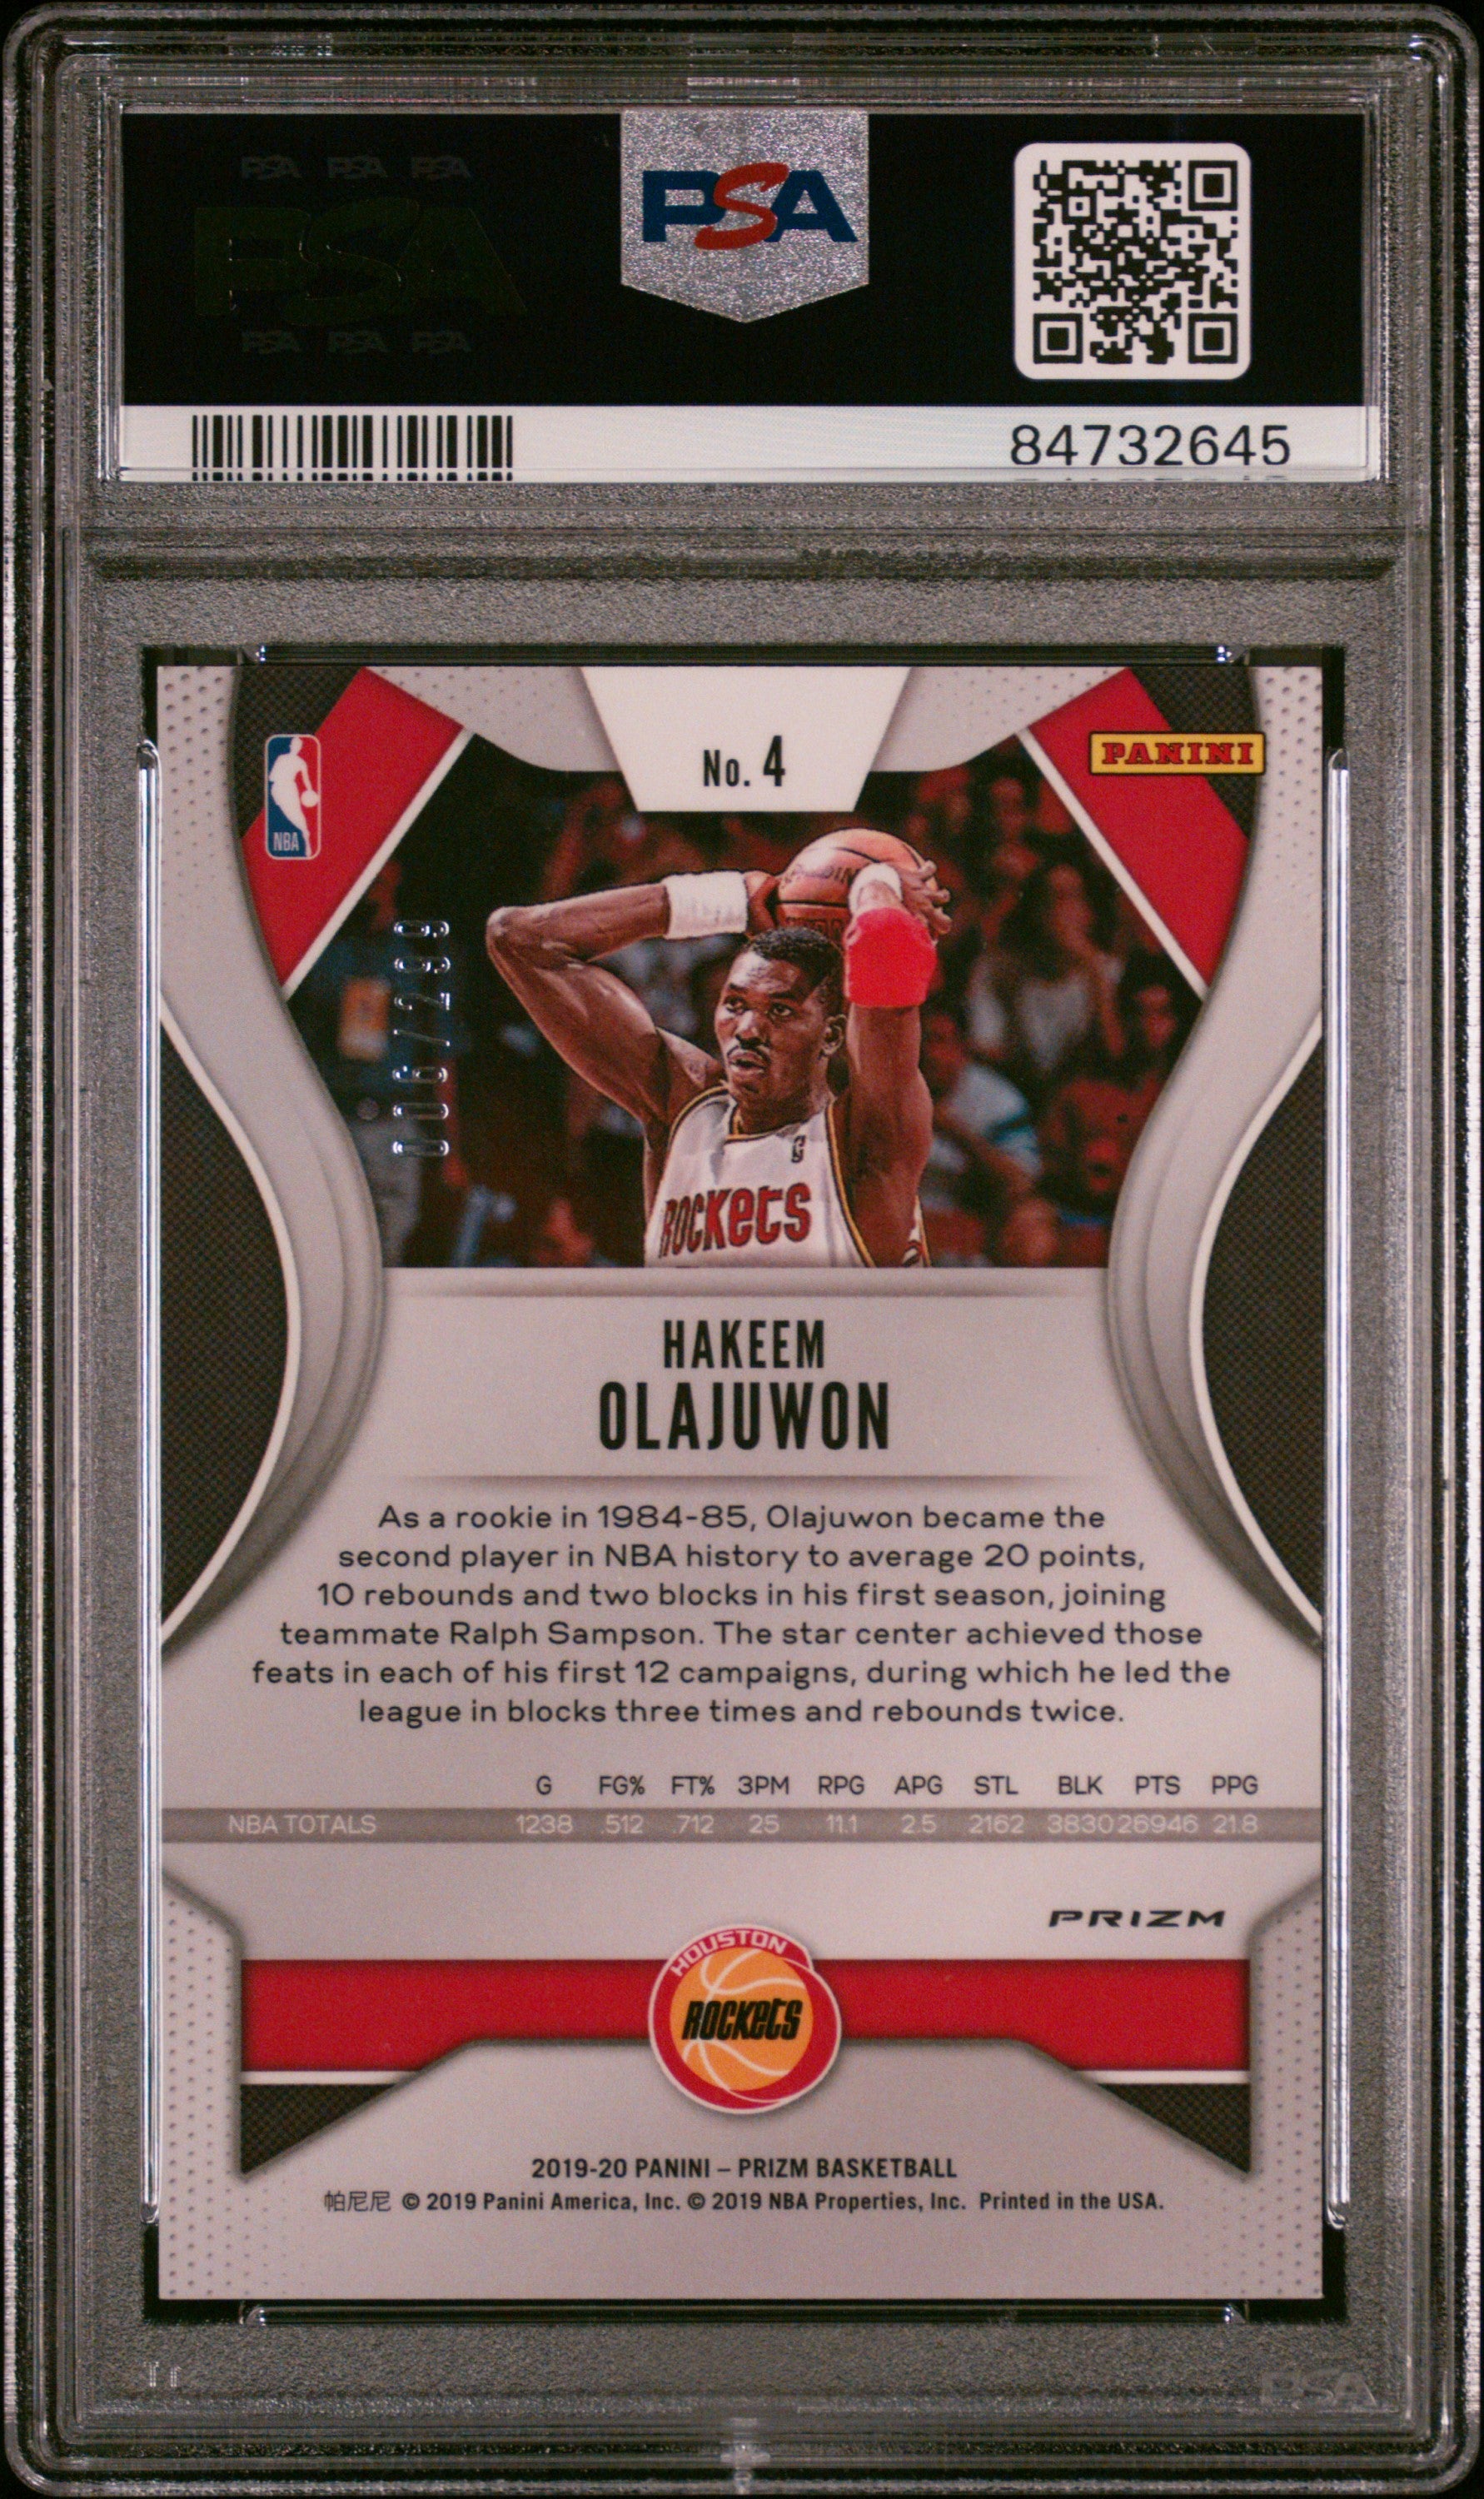 Hakeem Olajuwon 2019 Panini Prizm Red Basketball Card #4 Graded PSA 10 6/299-Powers Sports Memorabilia